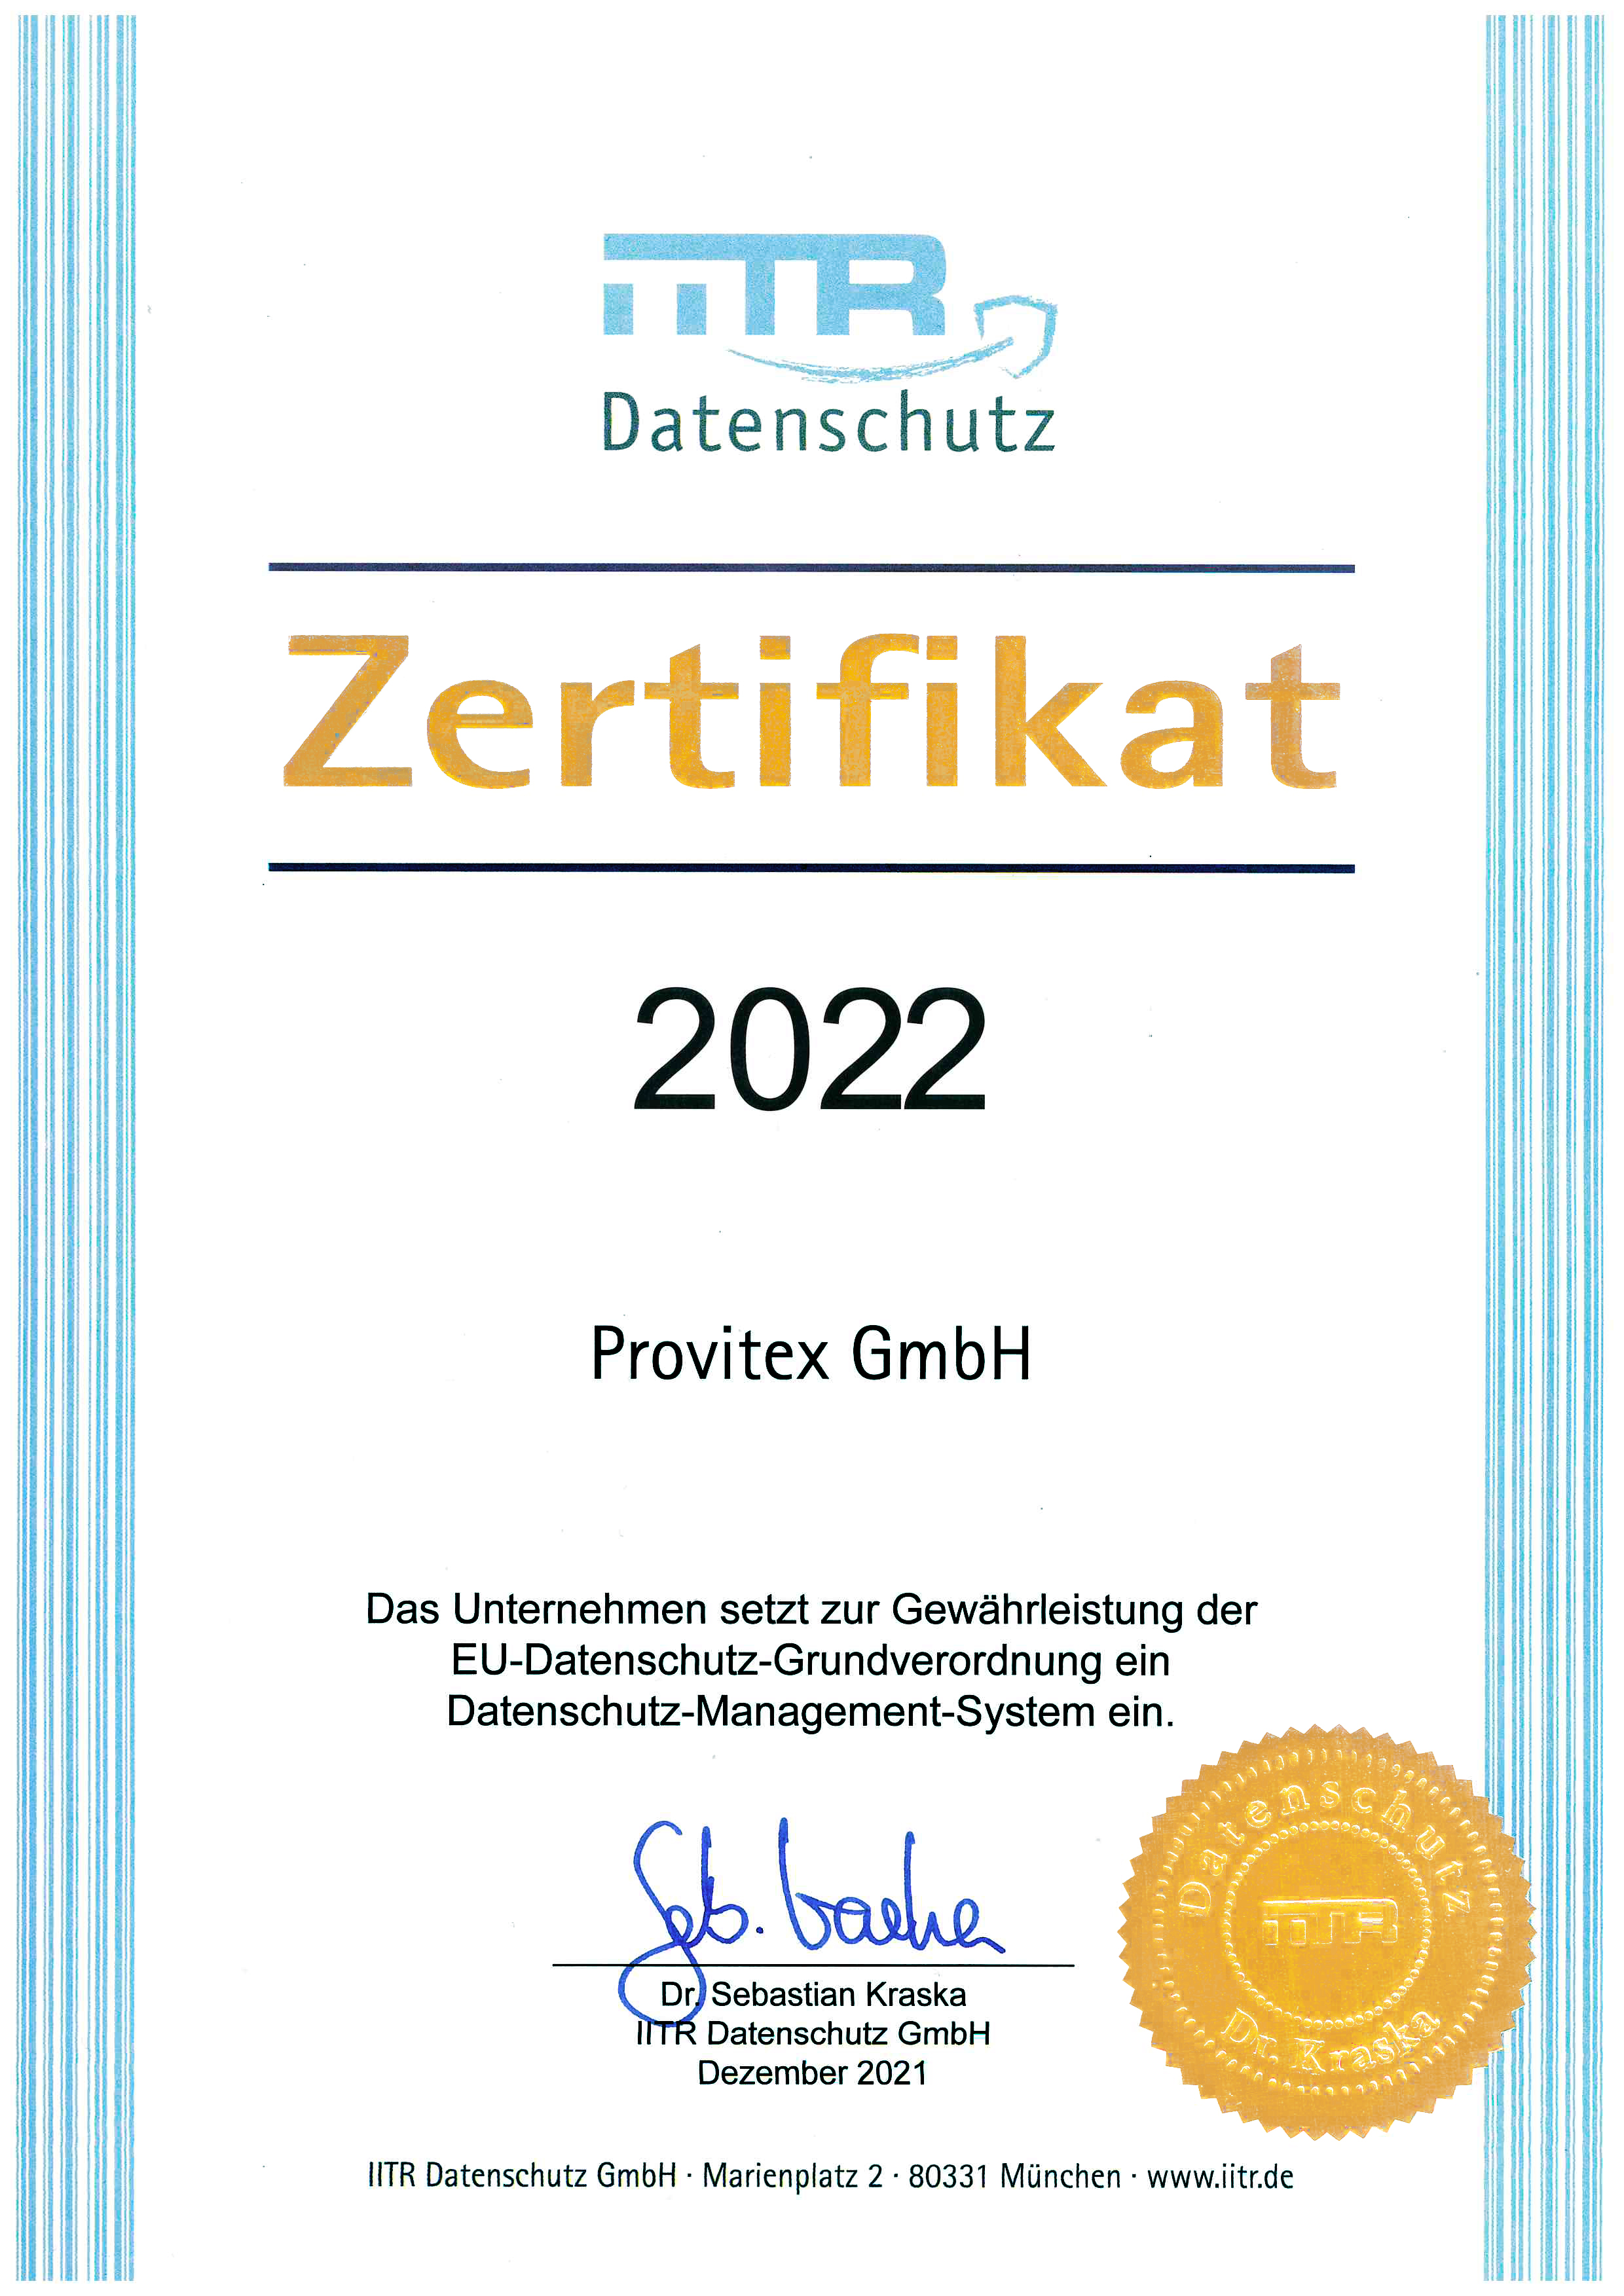 Bild: 2021 Zertifikat iitr